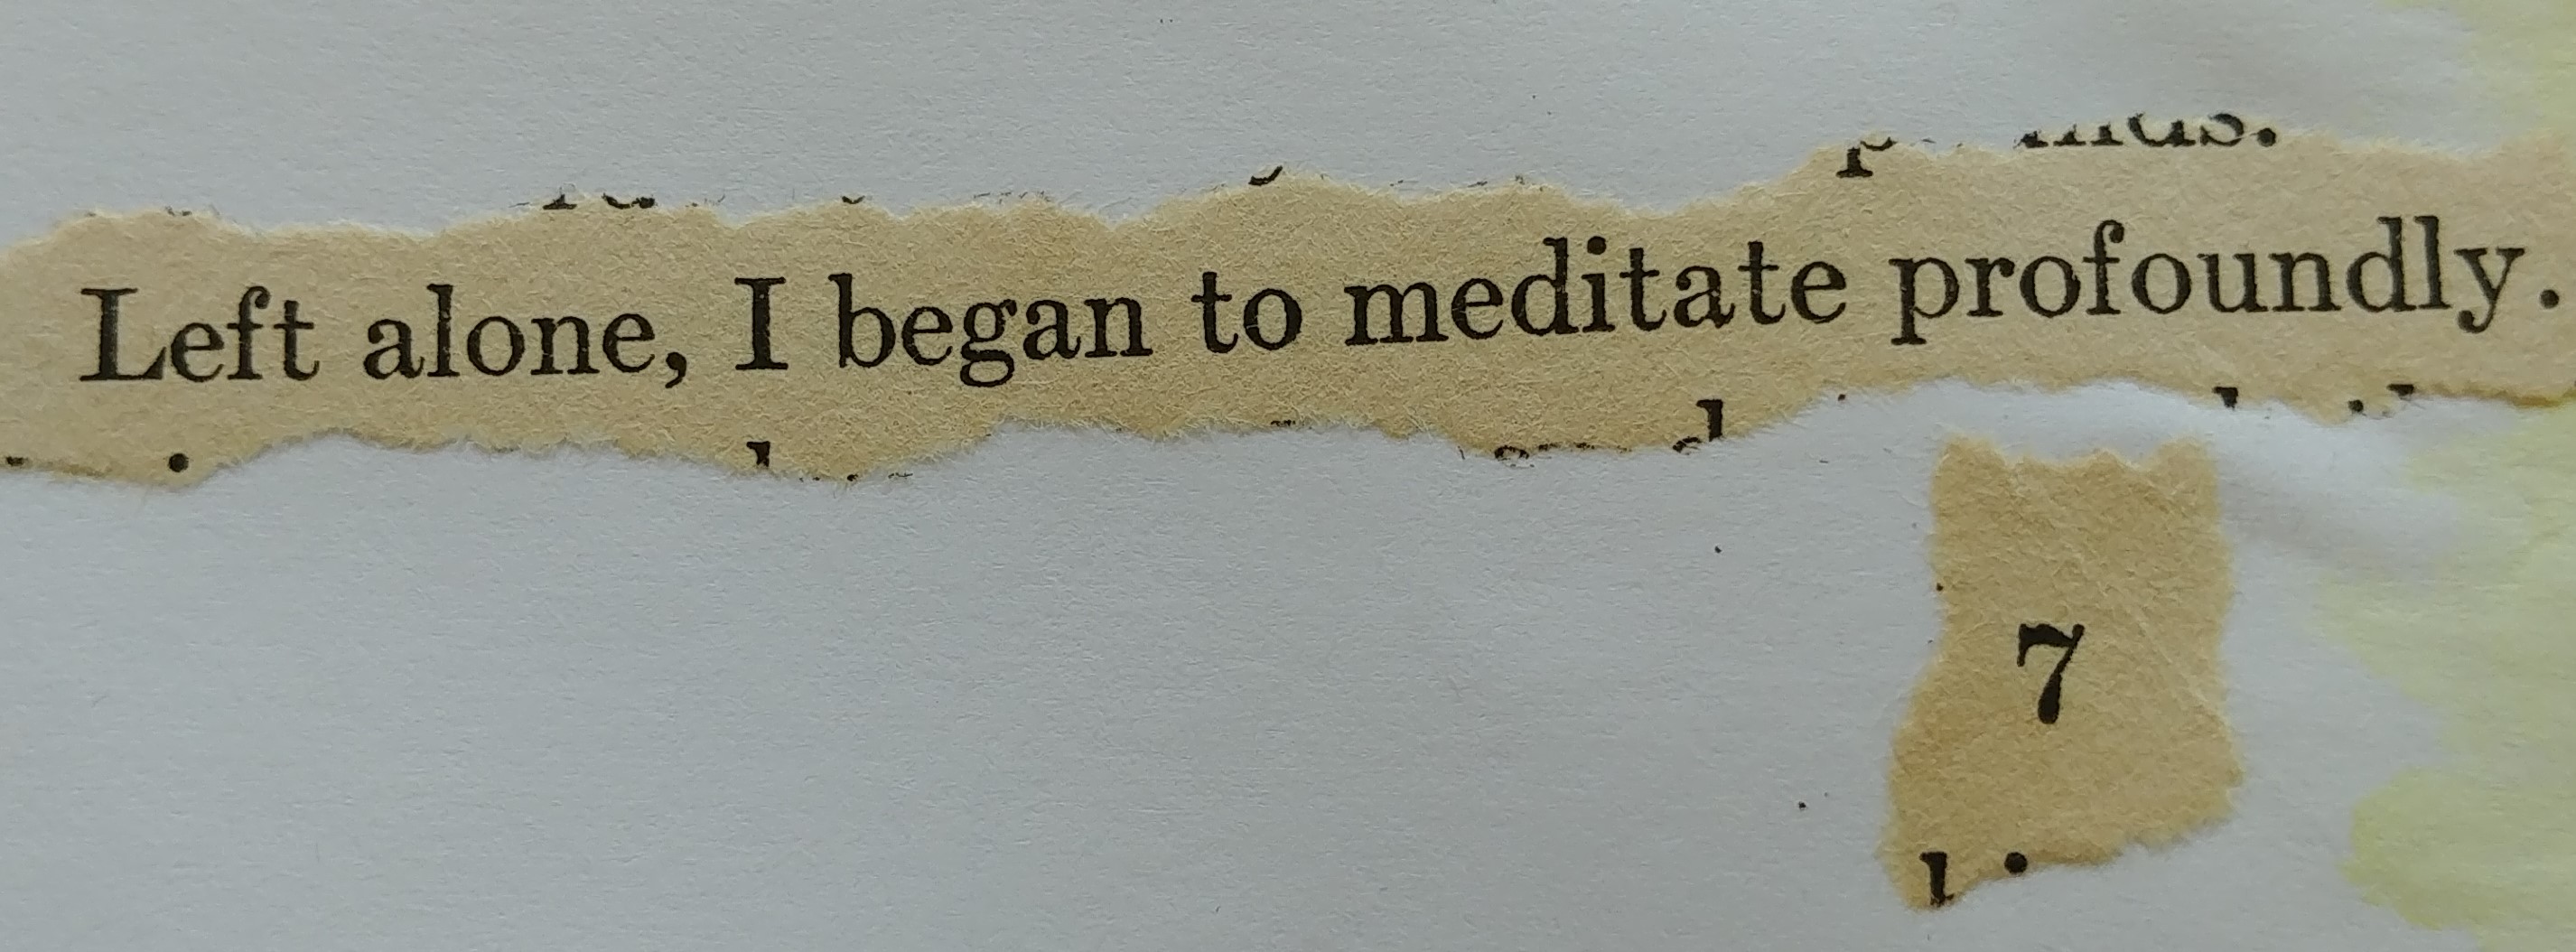 meditate quote